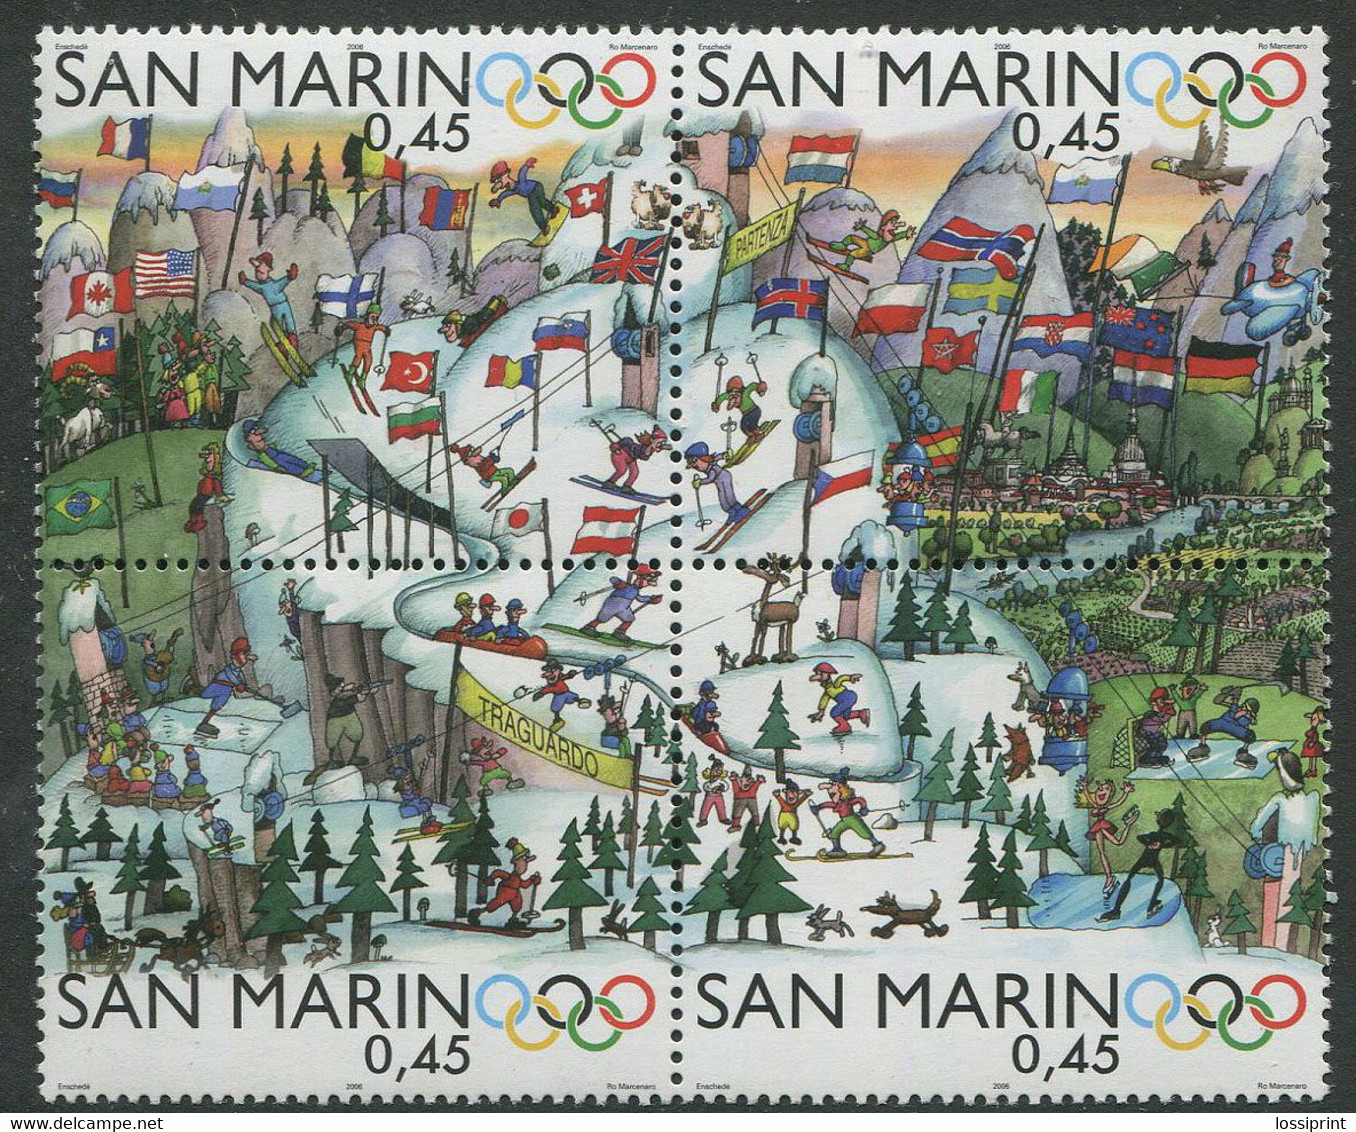 San Marino:Unused Stamps Serie Torino Olympic Games 2006, MNH - Inverno2006: Torino